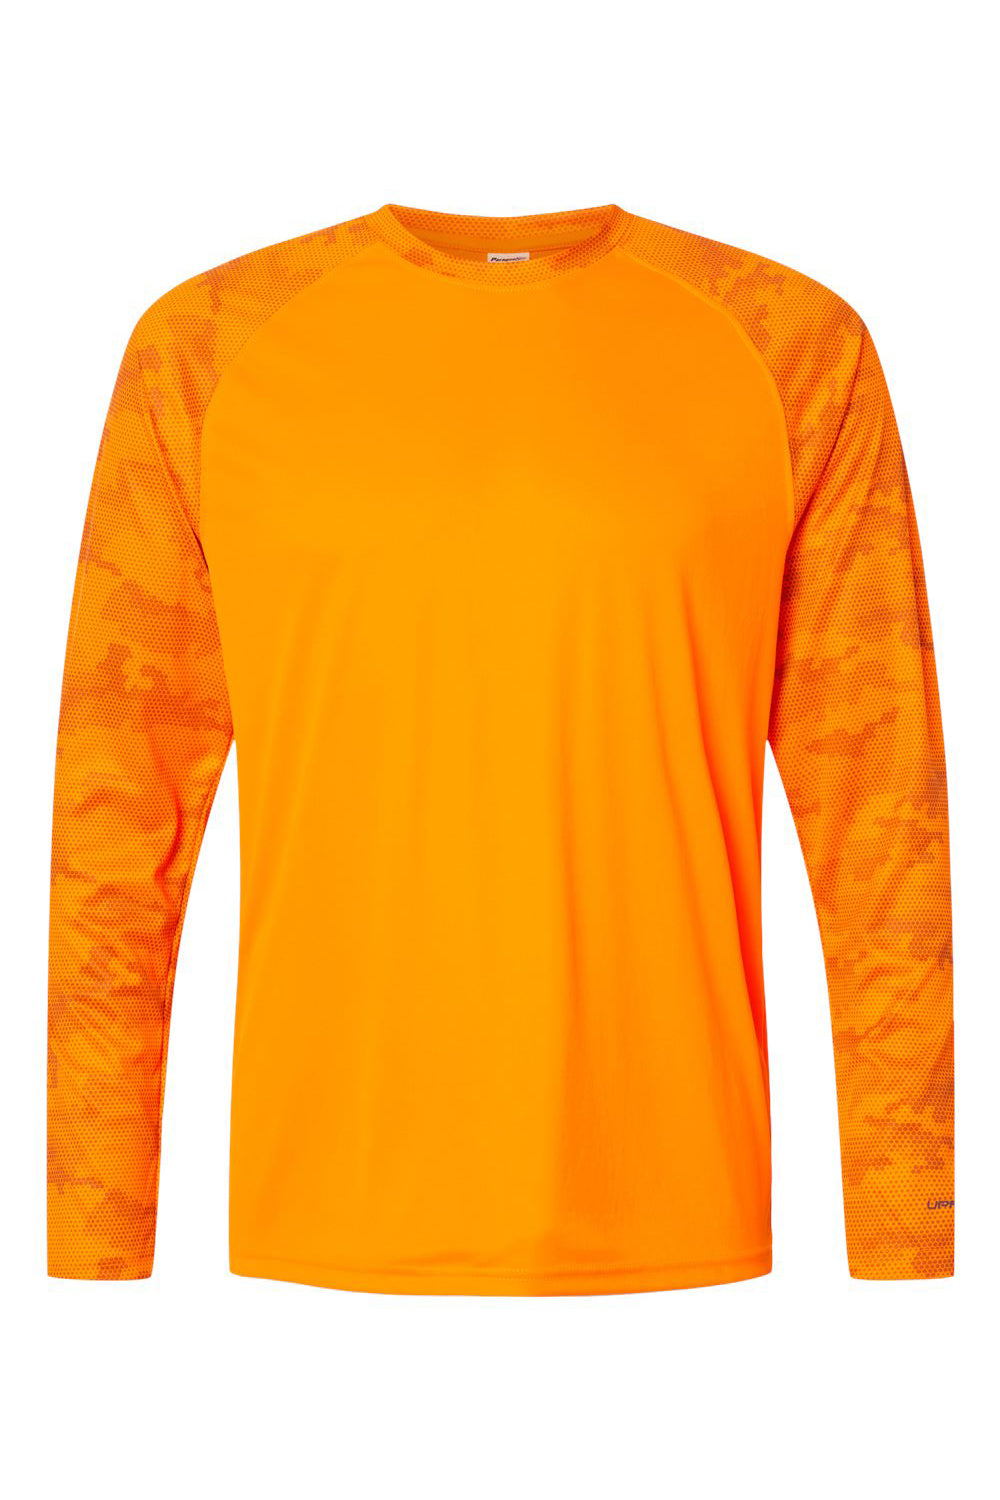 Paragon 216 Mens Cayman Performance Camo Colorblocked Long Sleeve Crewneck T-Shirt Neon Orange Flat Front